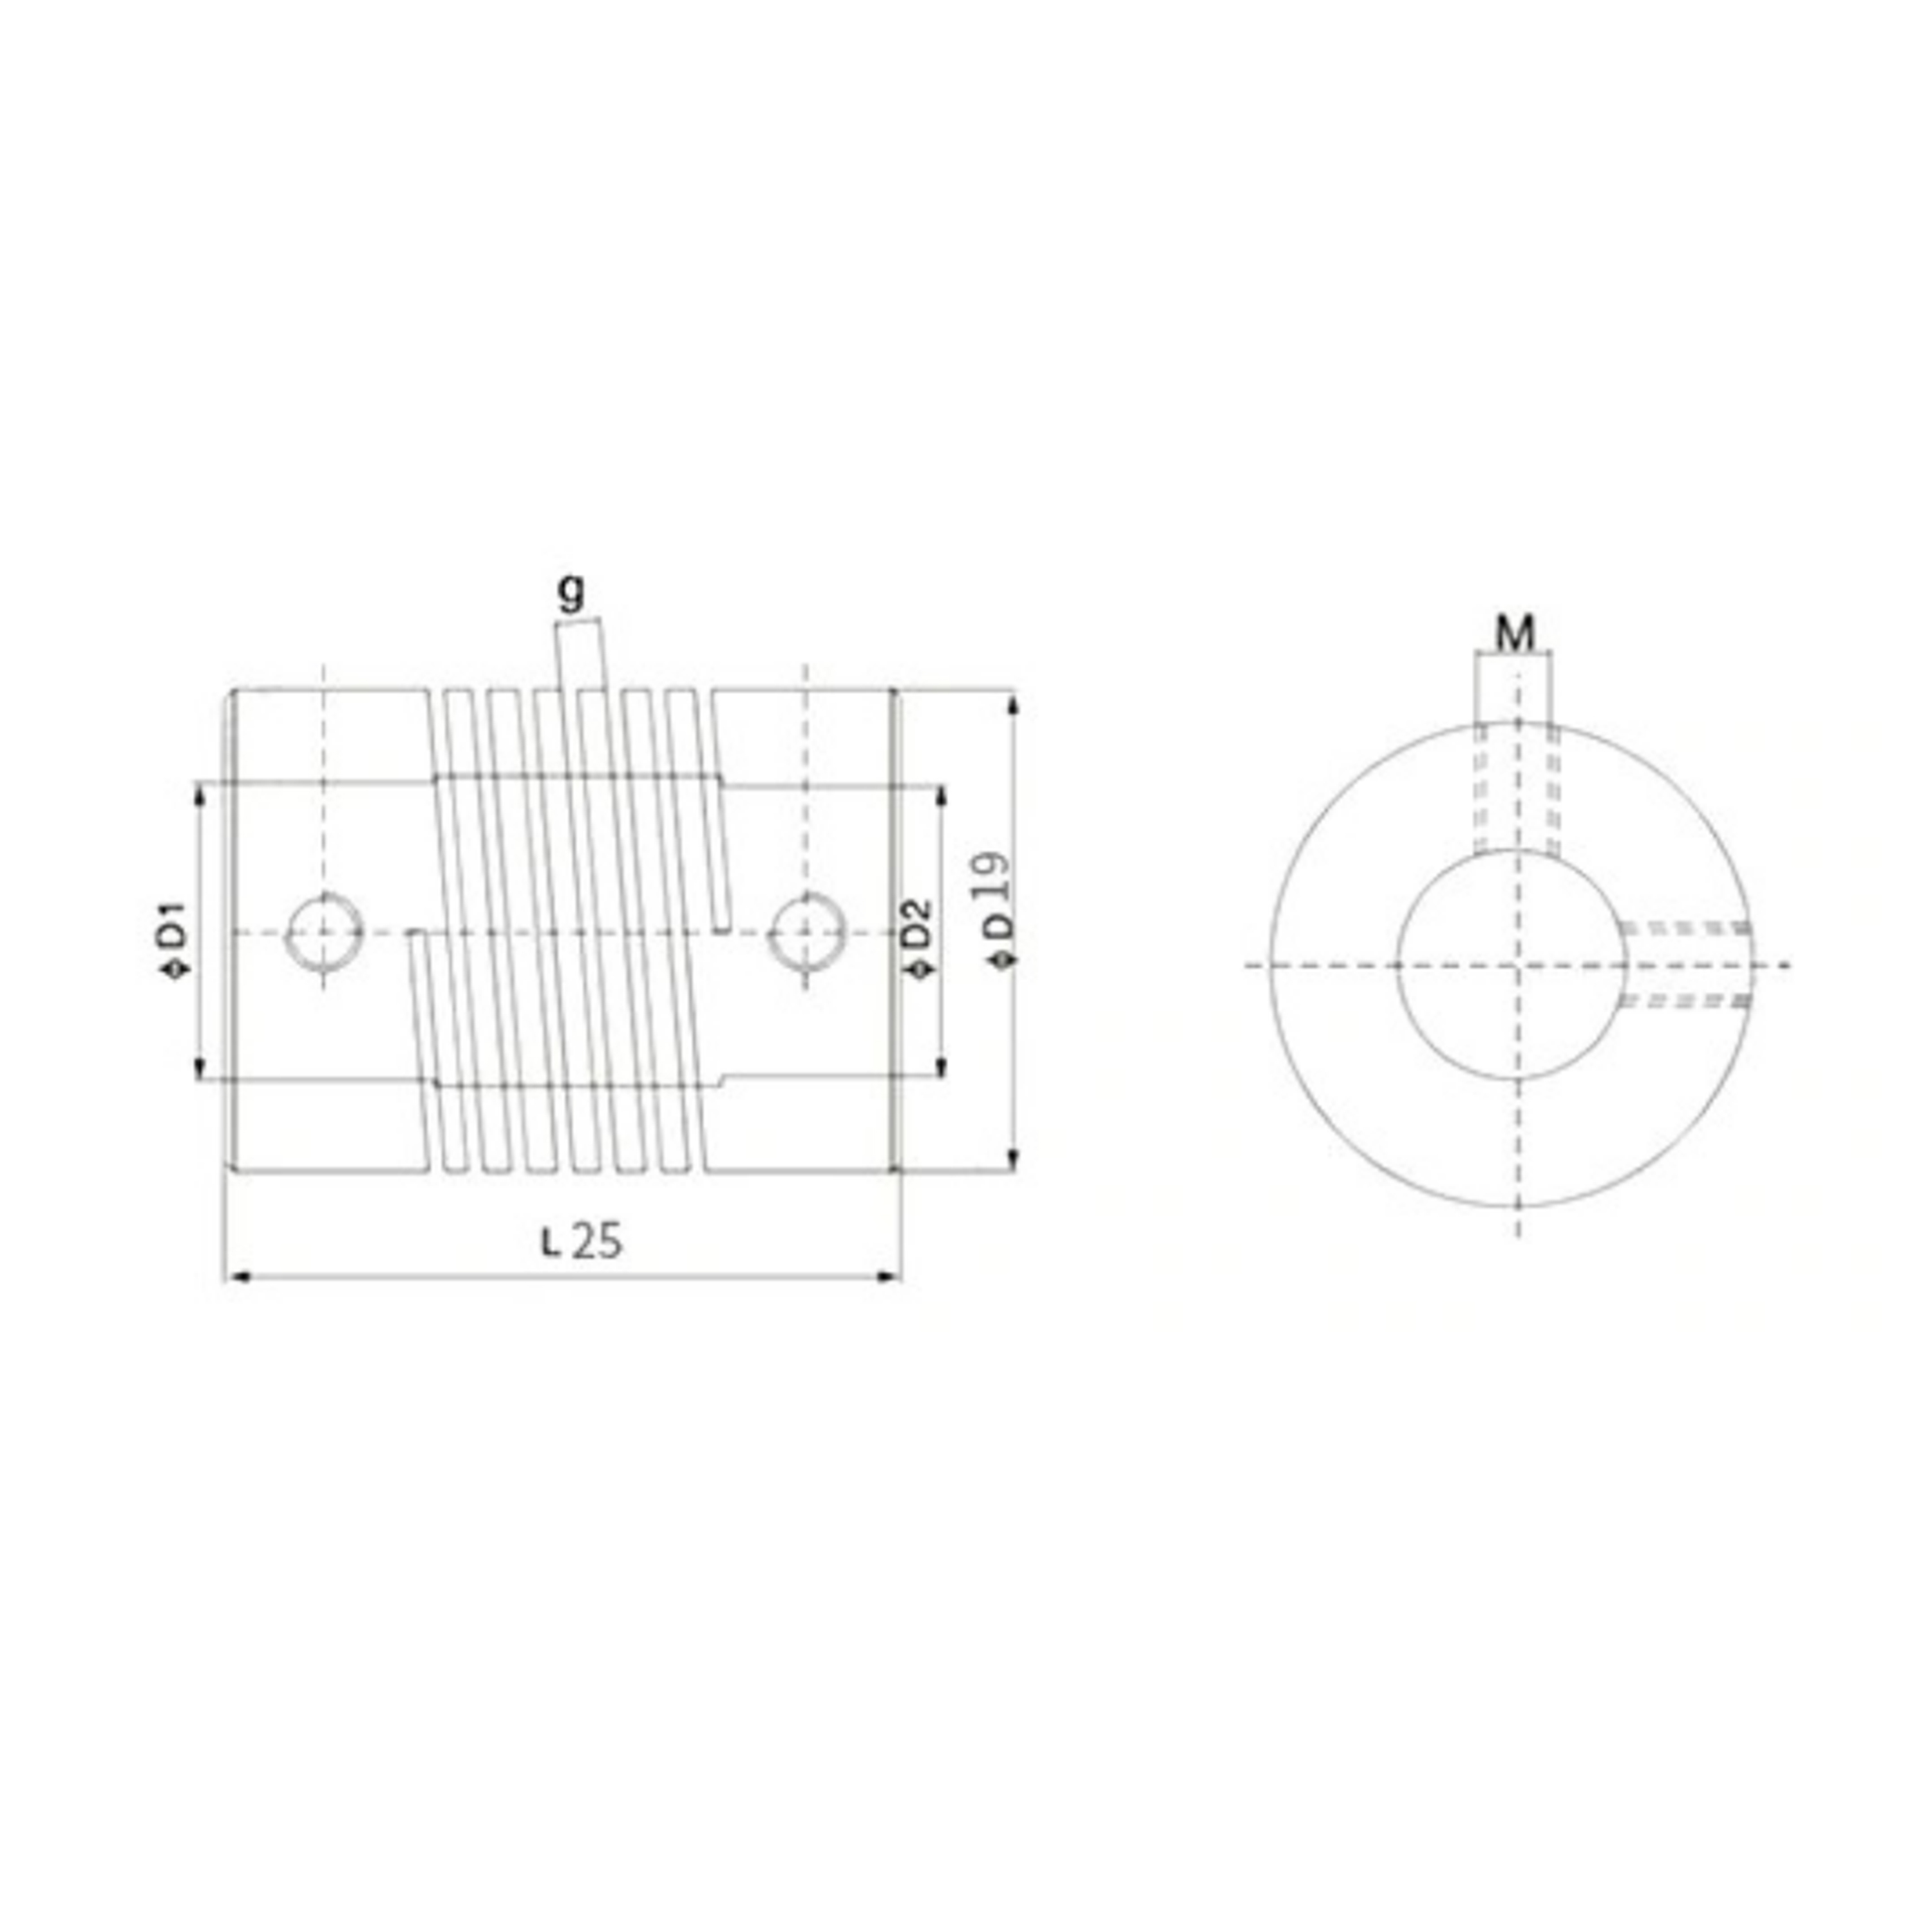 [TN-A5525] TN-A5525 tornillo acople para impresora 3D 5x5x25mm